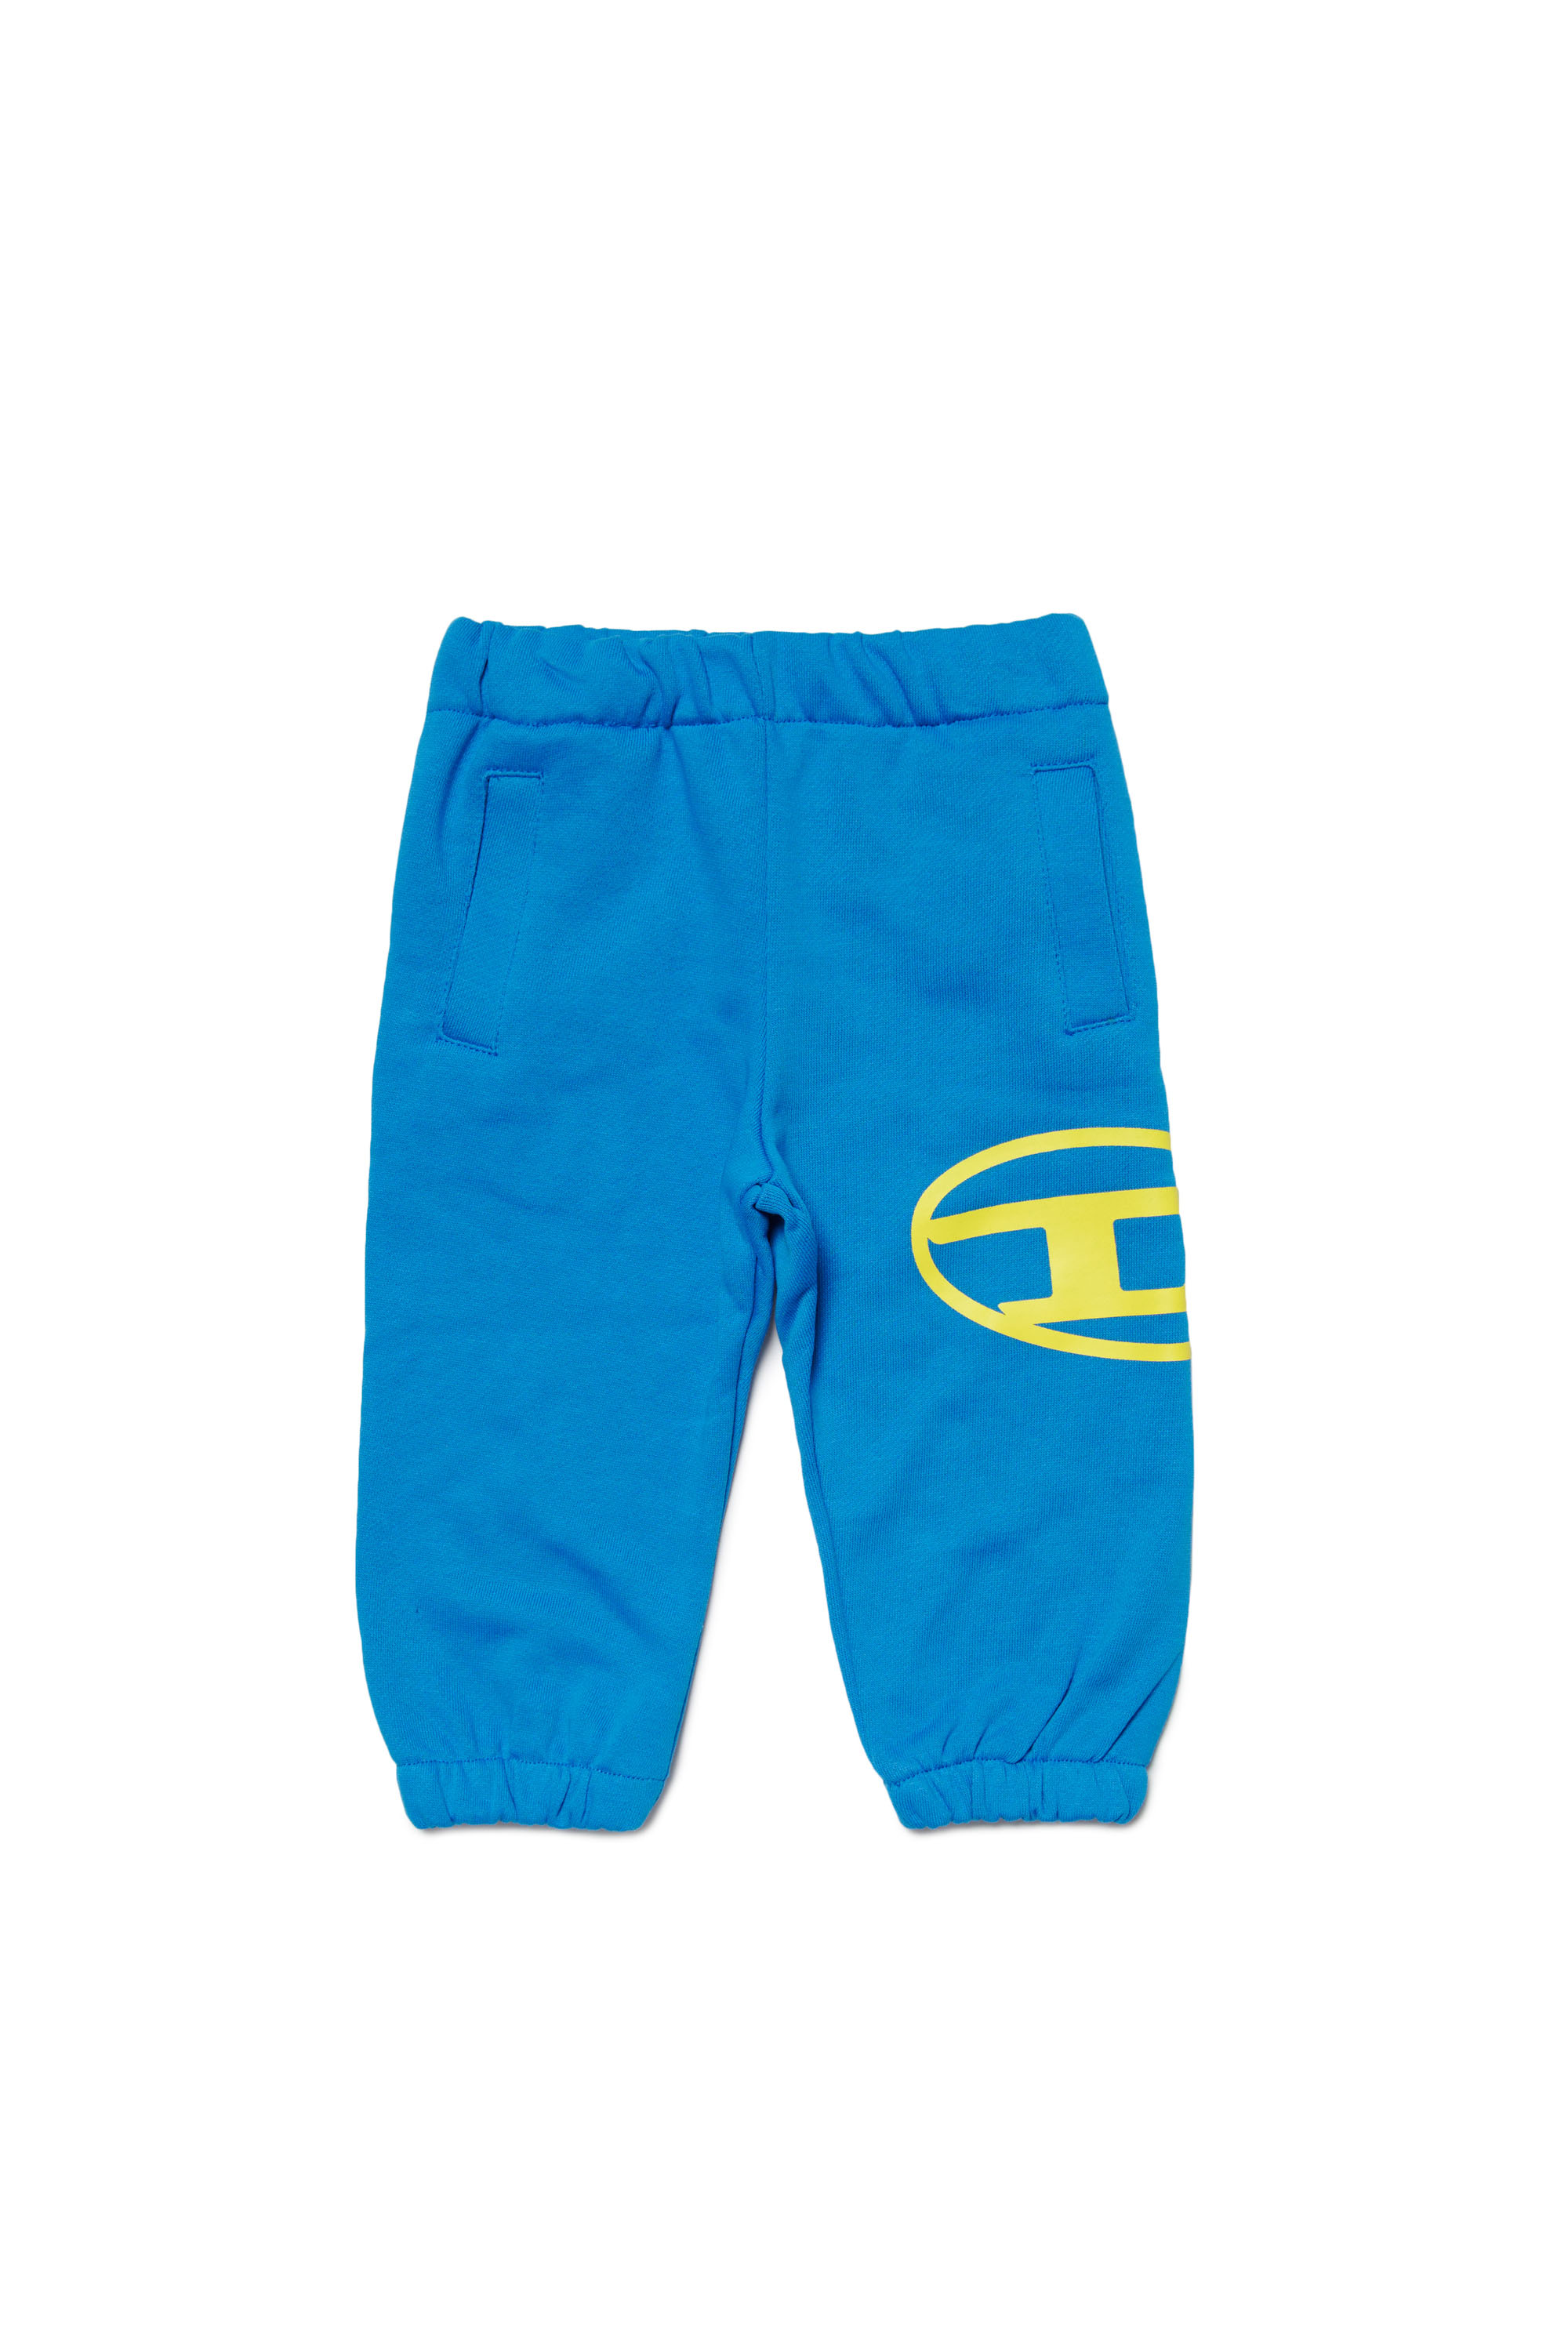 Diesel - Pantaloni tuta con logo Oval D stampato - Pantaloni - Unisex - Blu